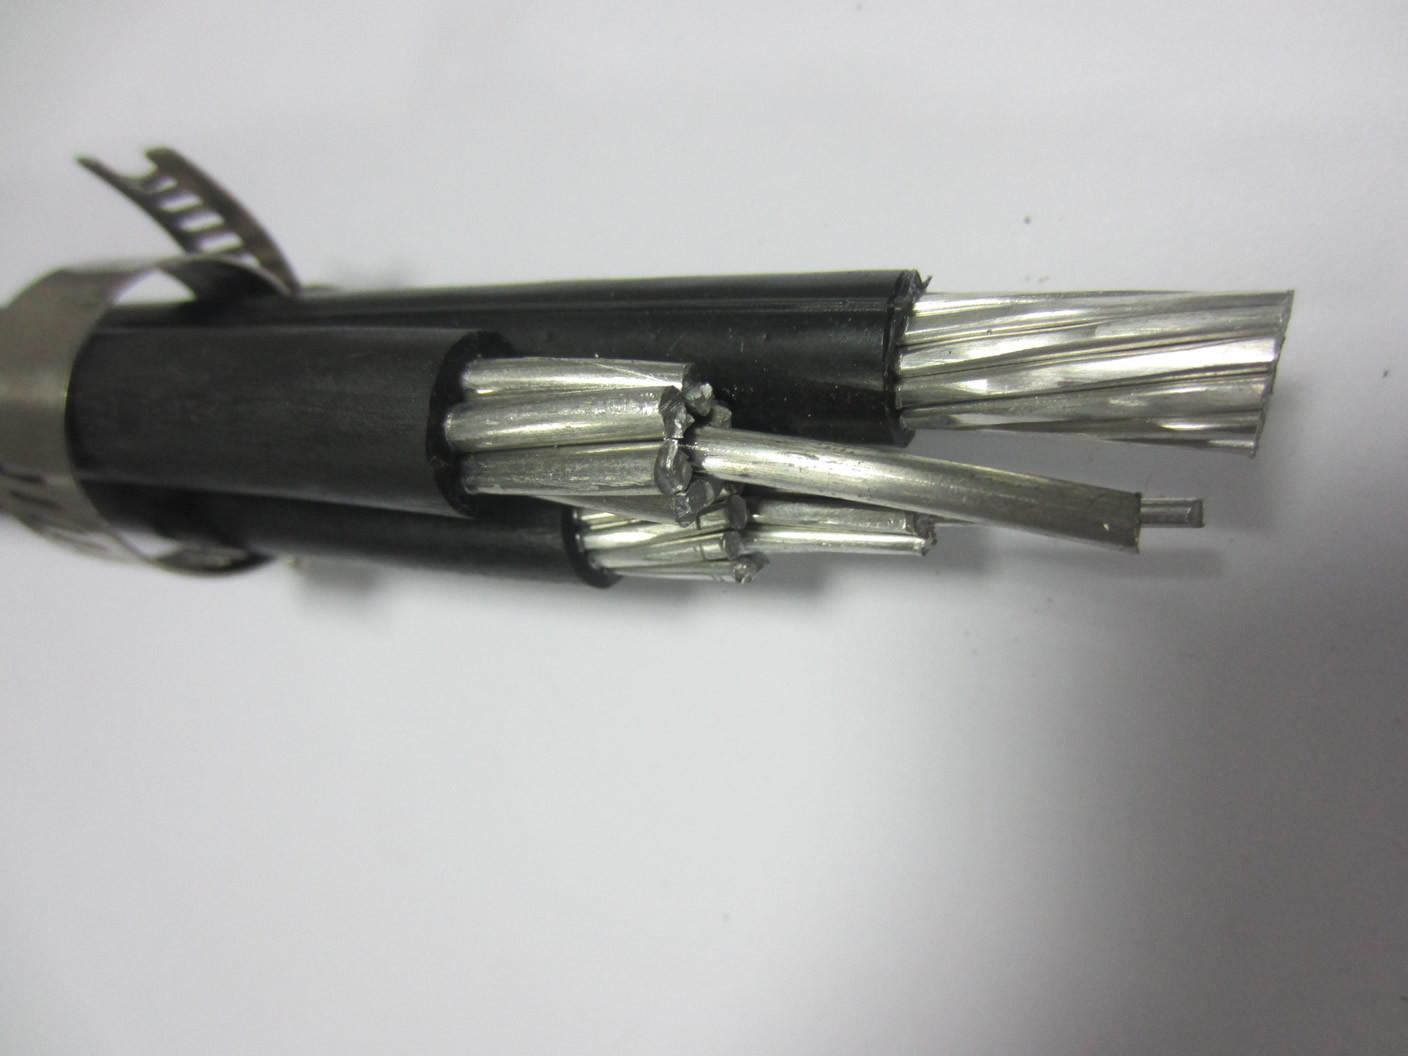 
                ABC Cable De Aluminio Autoportante Tipo Caai De 3X70+1X16+Na50mm2 Caai-S Cables
            